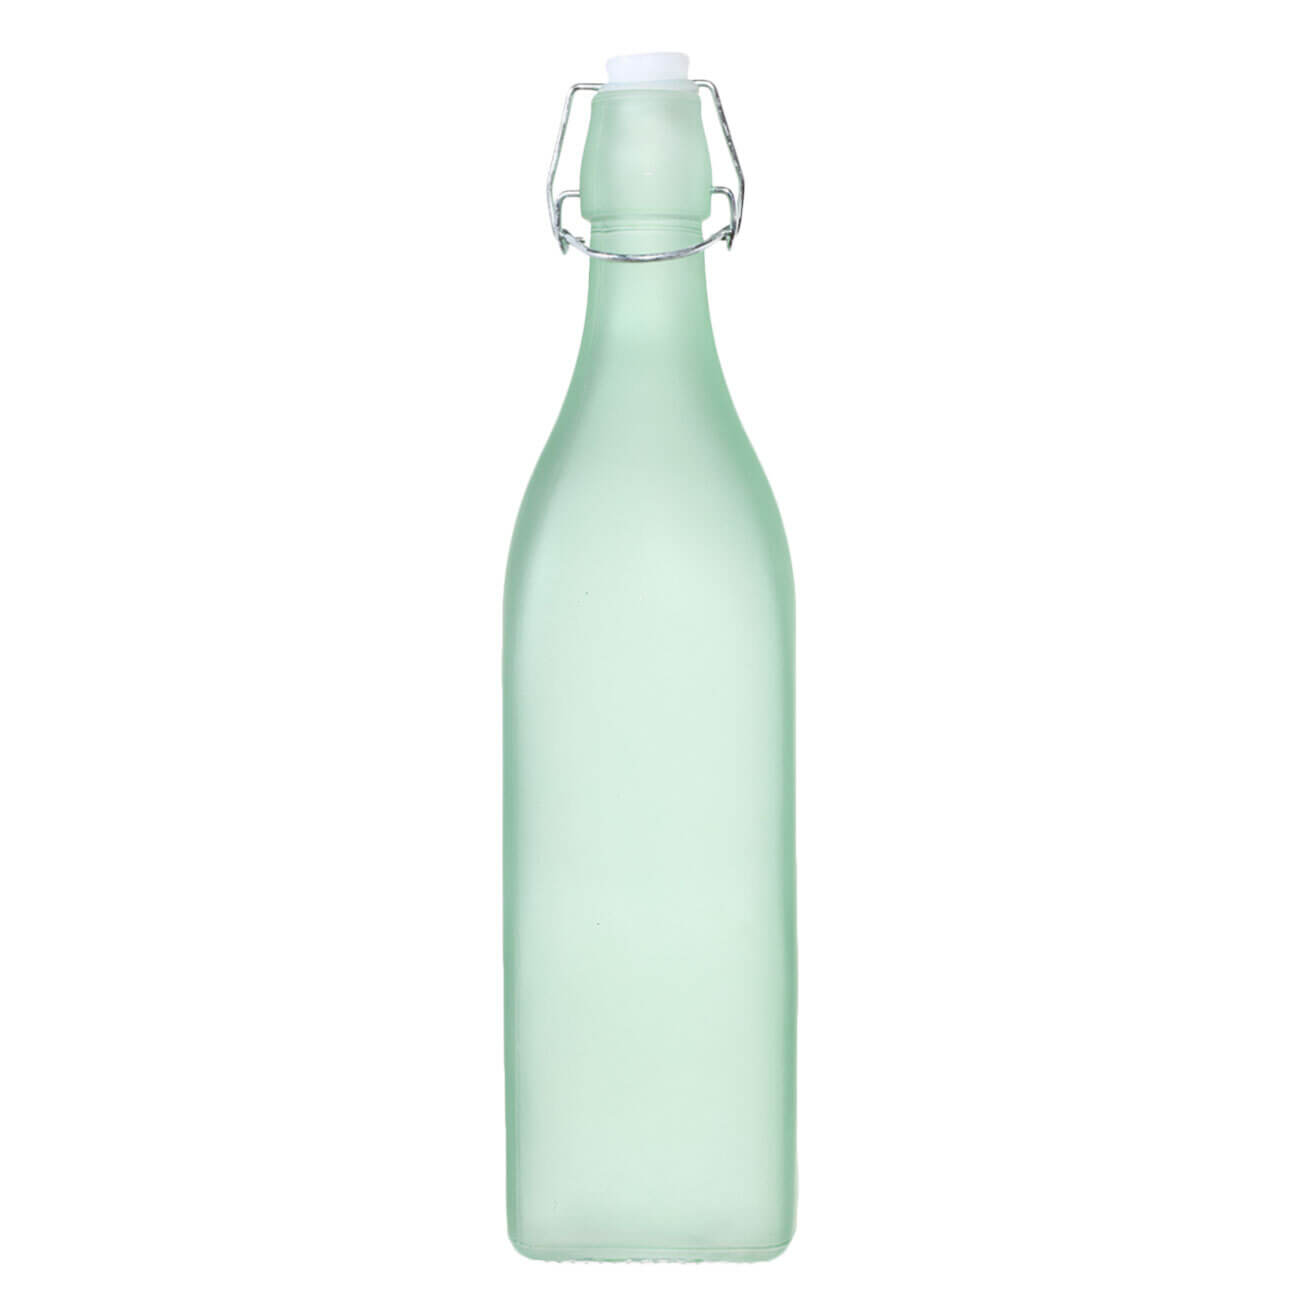 Бутылка для масла или уксуса, 1 л, с клипсой, стекло/металл, зеленая, Light kitchen стеклянная бутылка для масла уксуса mallony